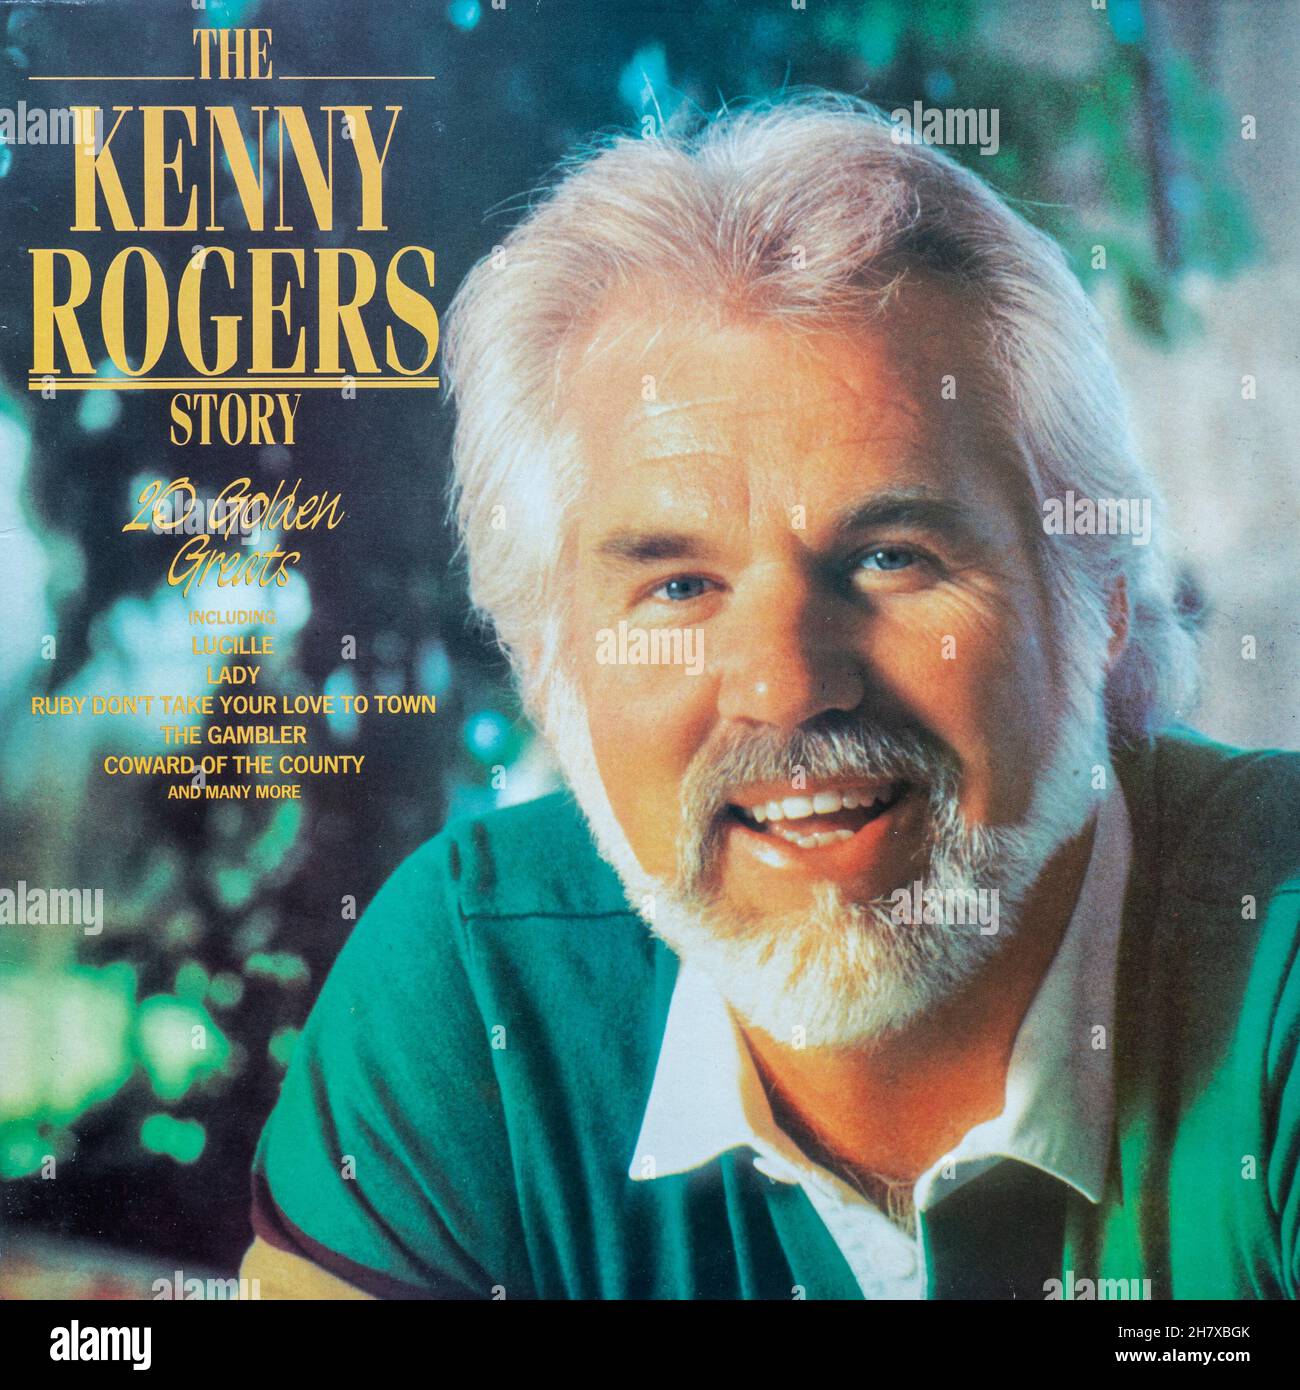 The Kenny Rogers Story, 20 goldene Größen, 1985 Vinyl-LP-Plattencover, Album des amerikanischen Country-Sängers Stockfoto